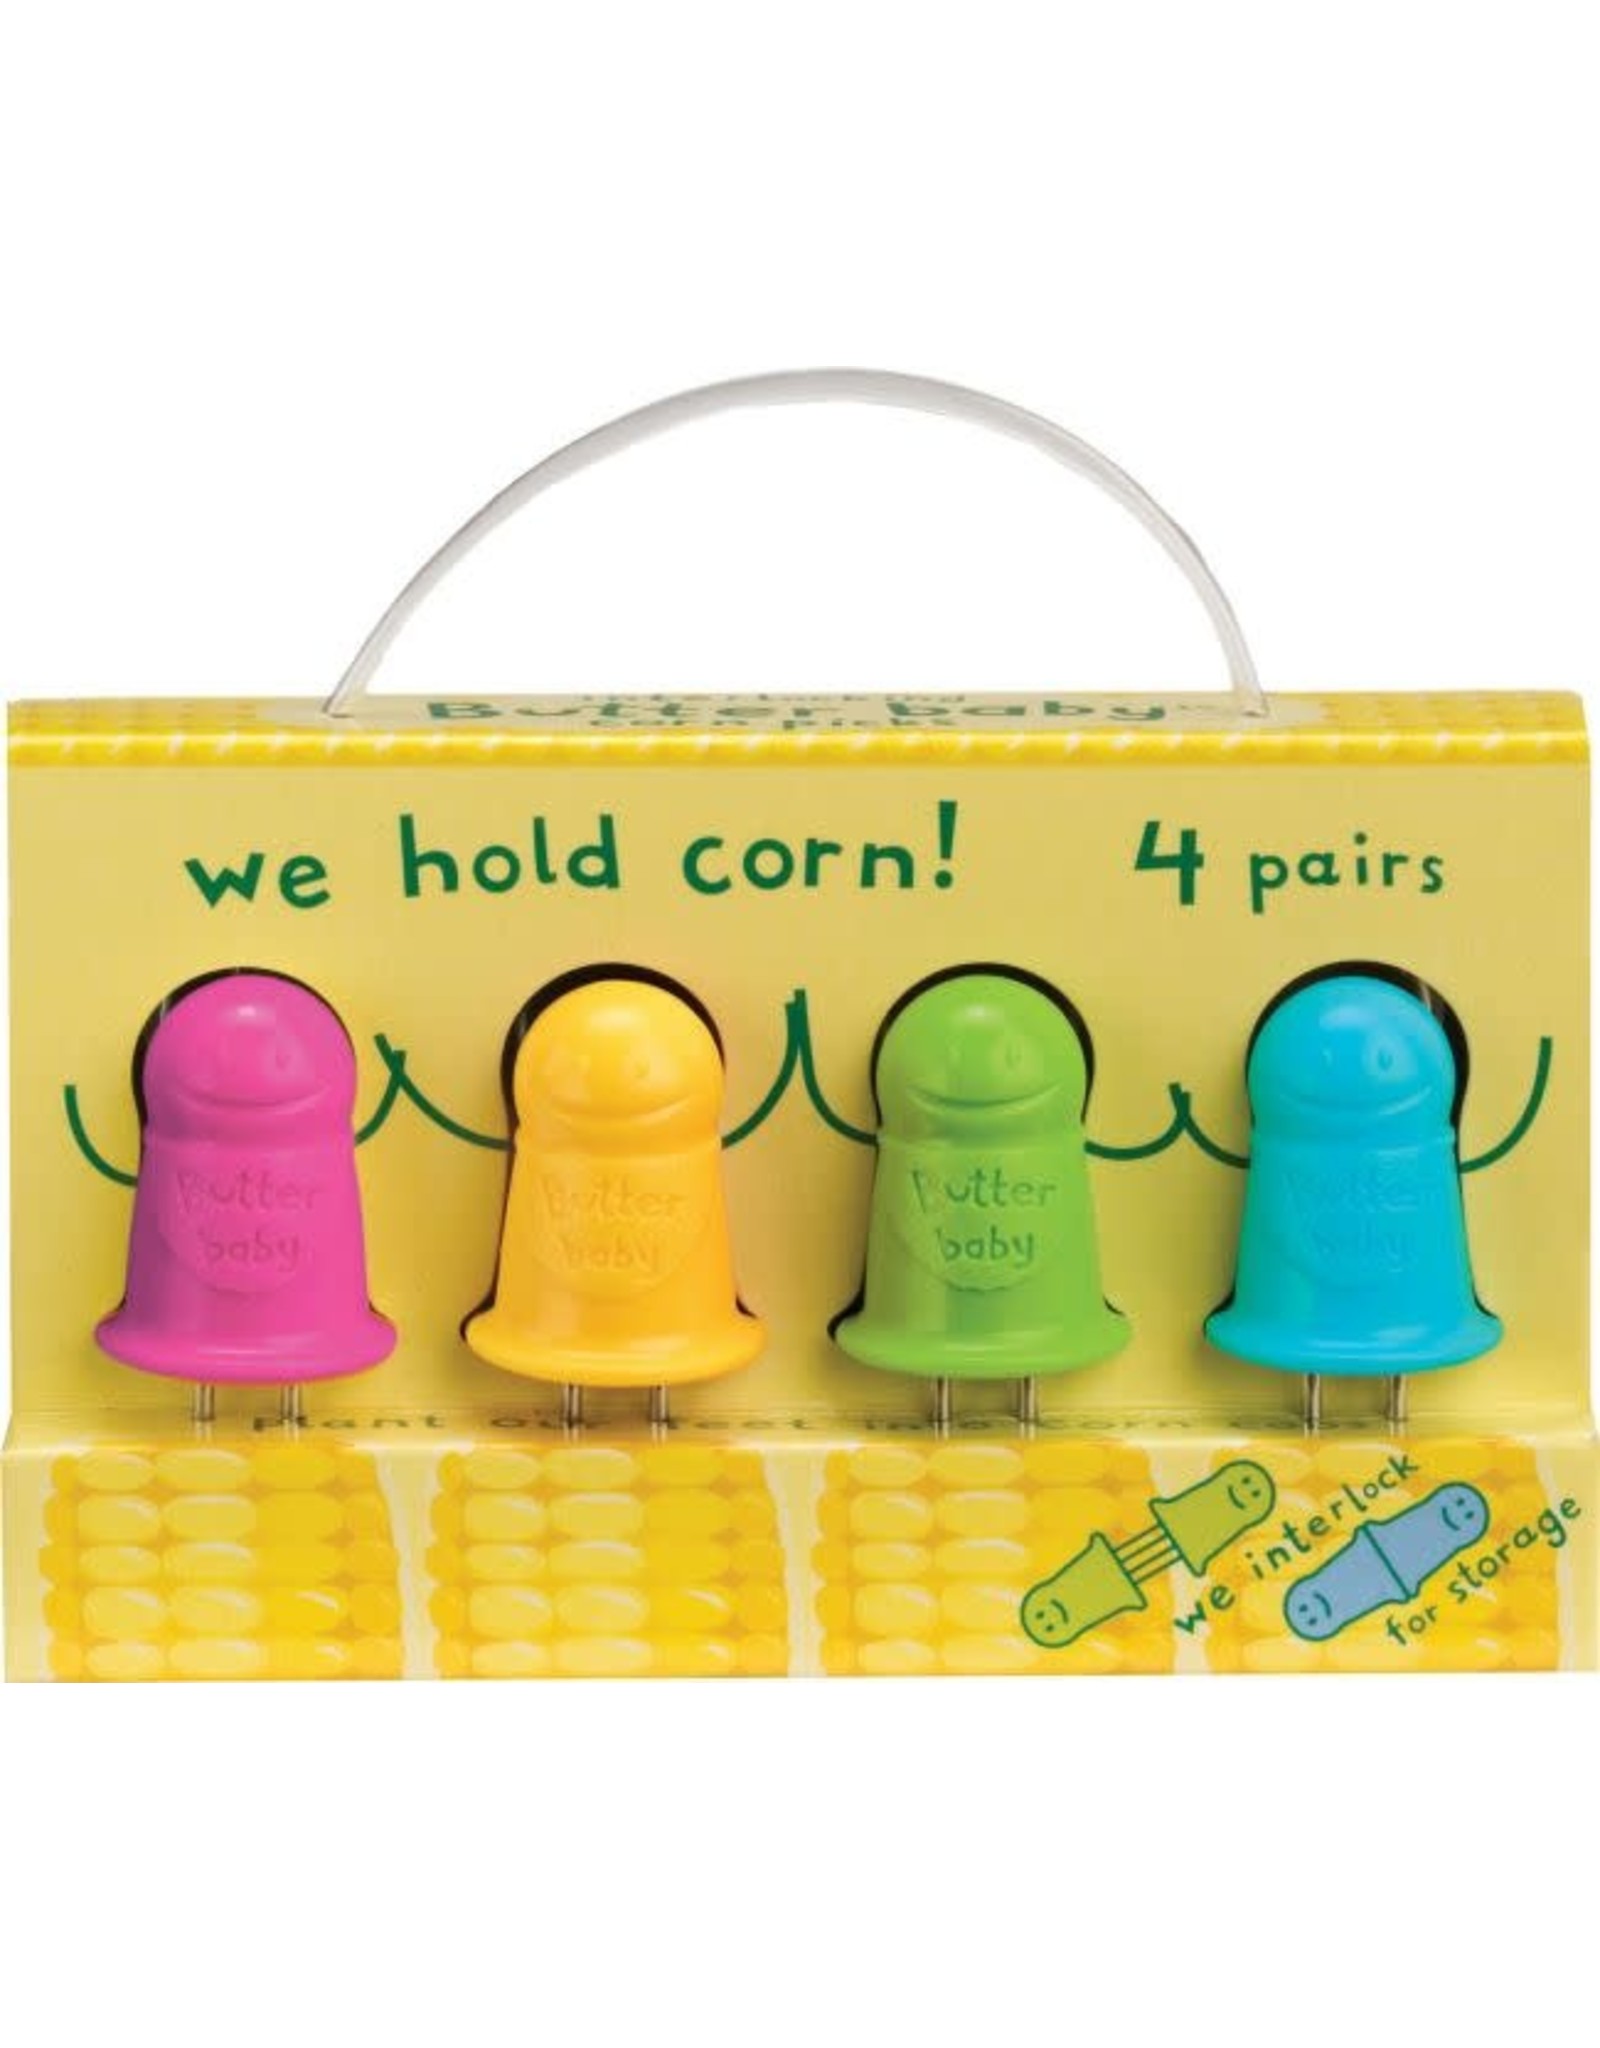 Talisman Designs Butter Baby Corn Picks